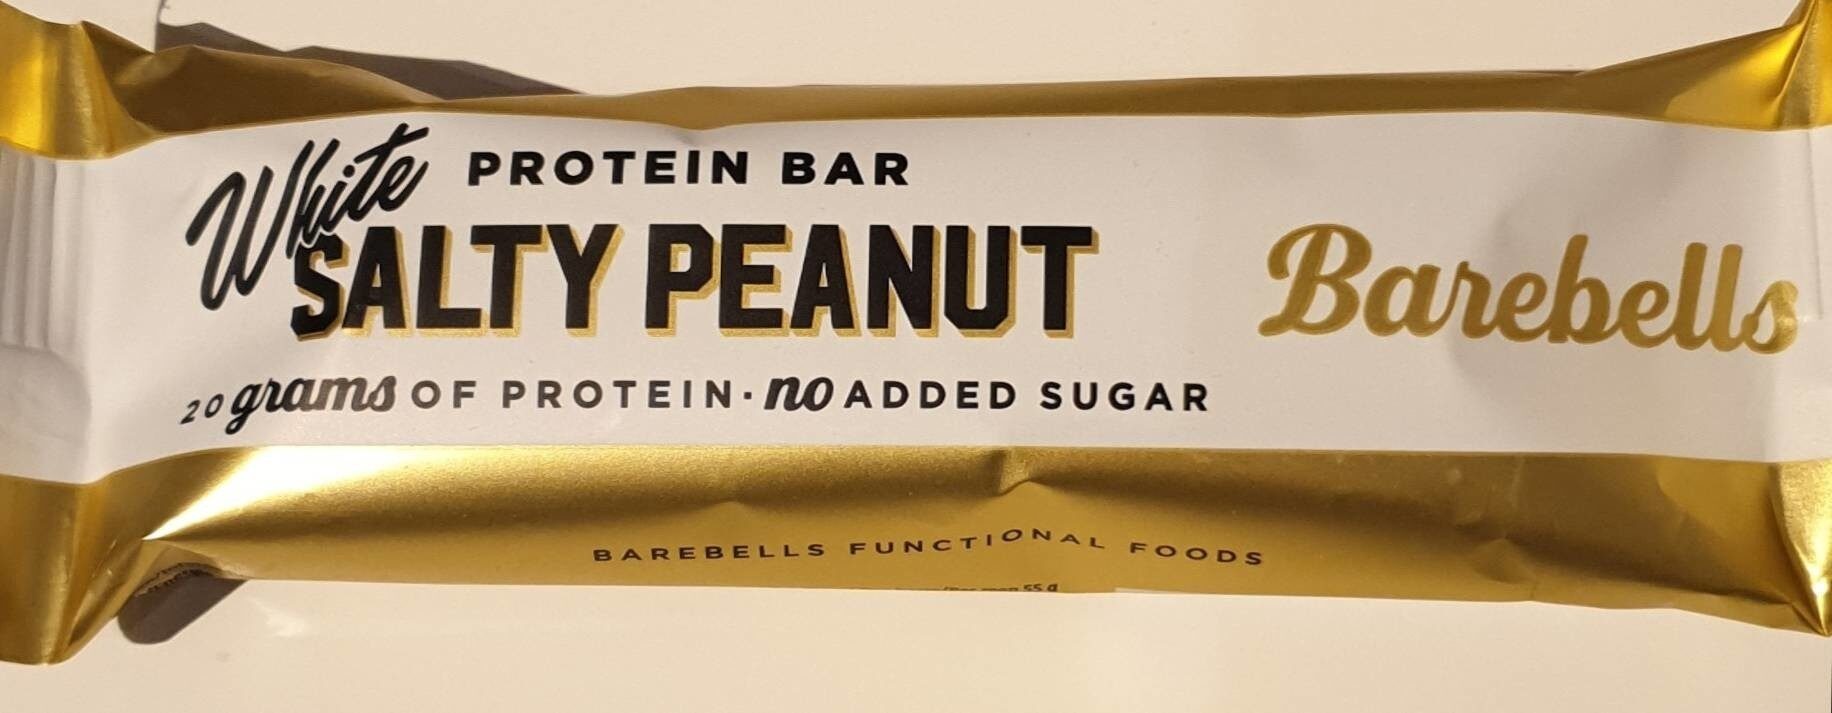 Barre proteinée salty peanut - Prodotto - fr